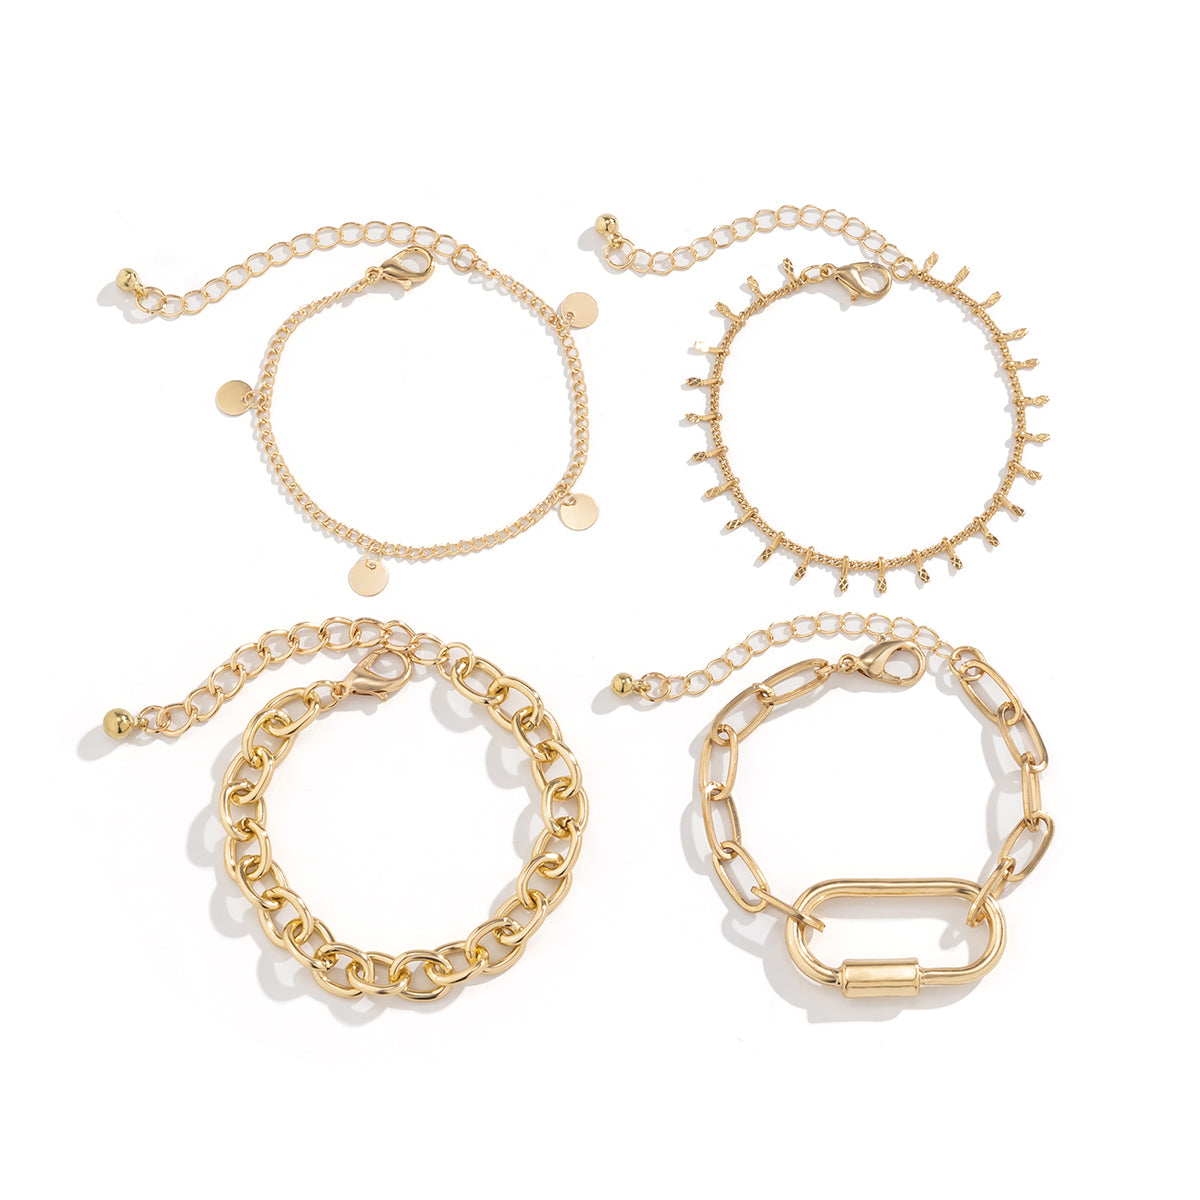 18K Gold-Plated Oval Charm Bracelet - Set Of Four